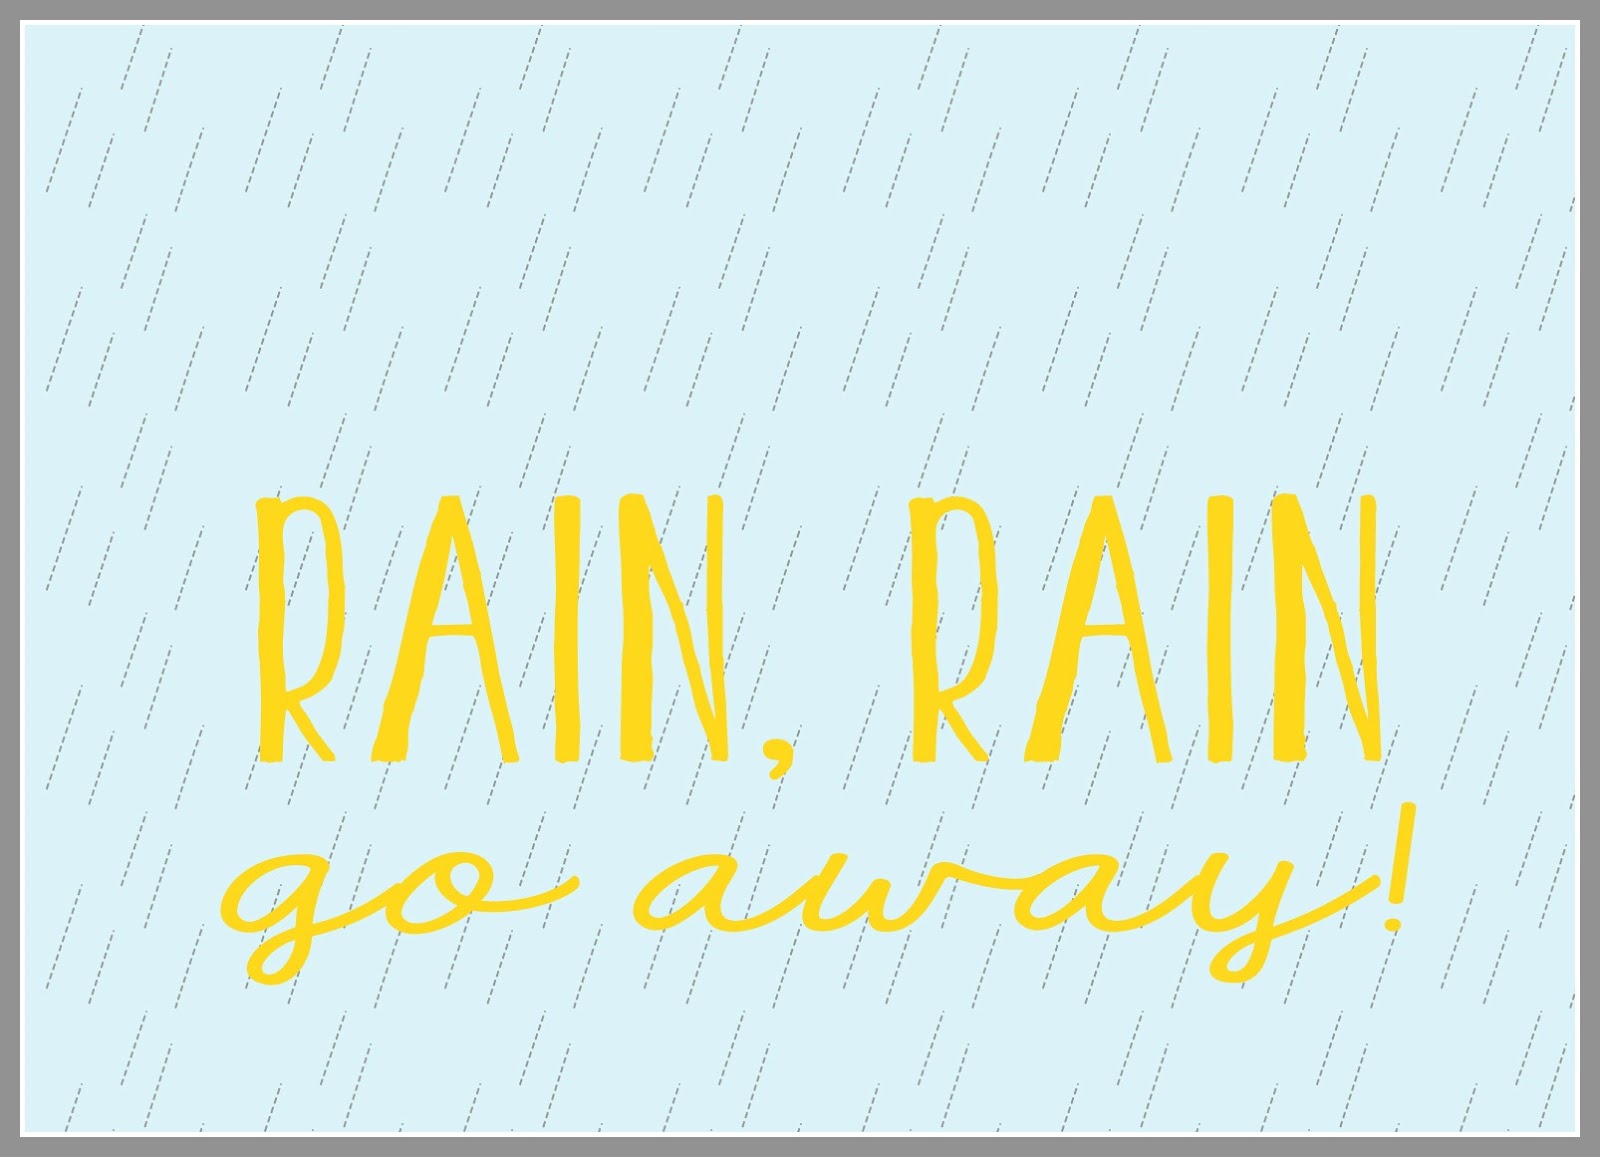 Rainy Day Work Quotes. QuotesGram